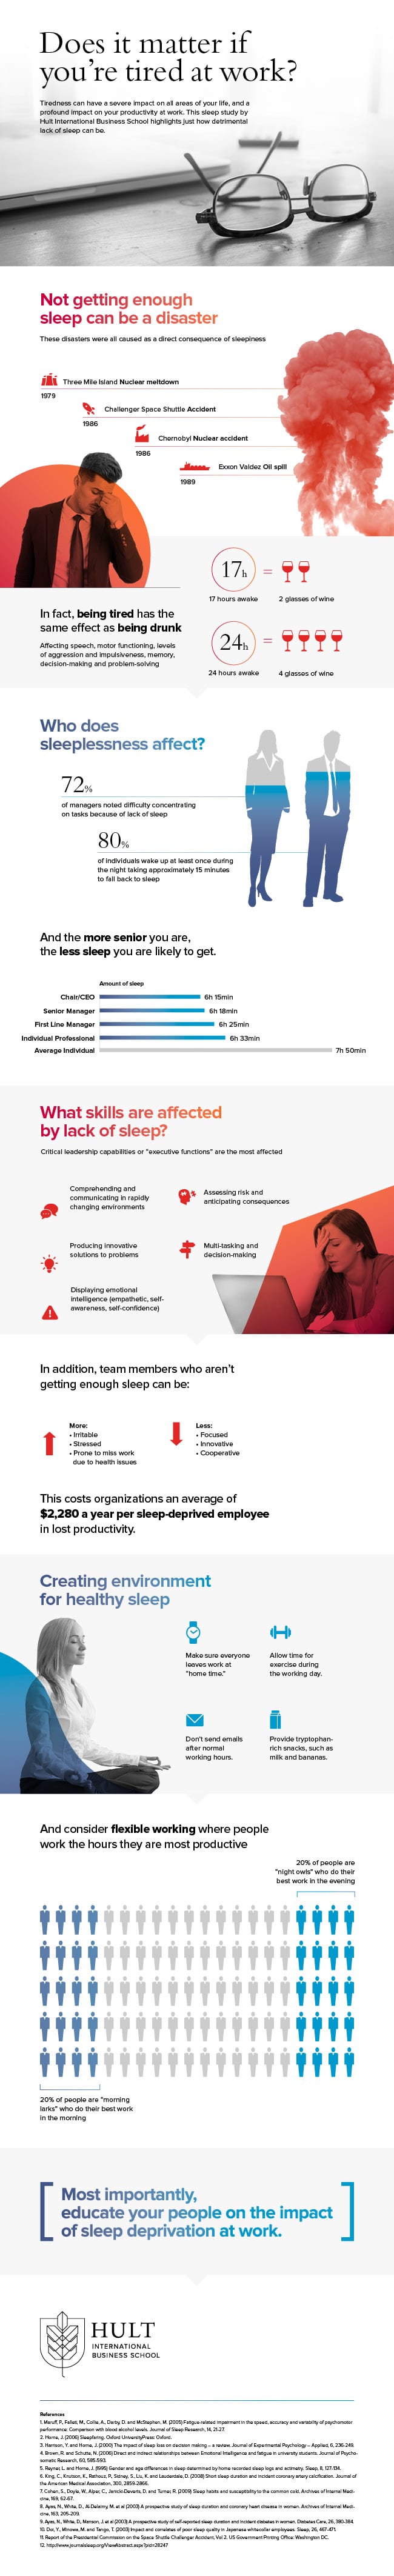 How sleep deprivation affects work